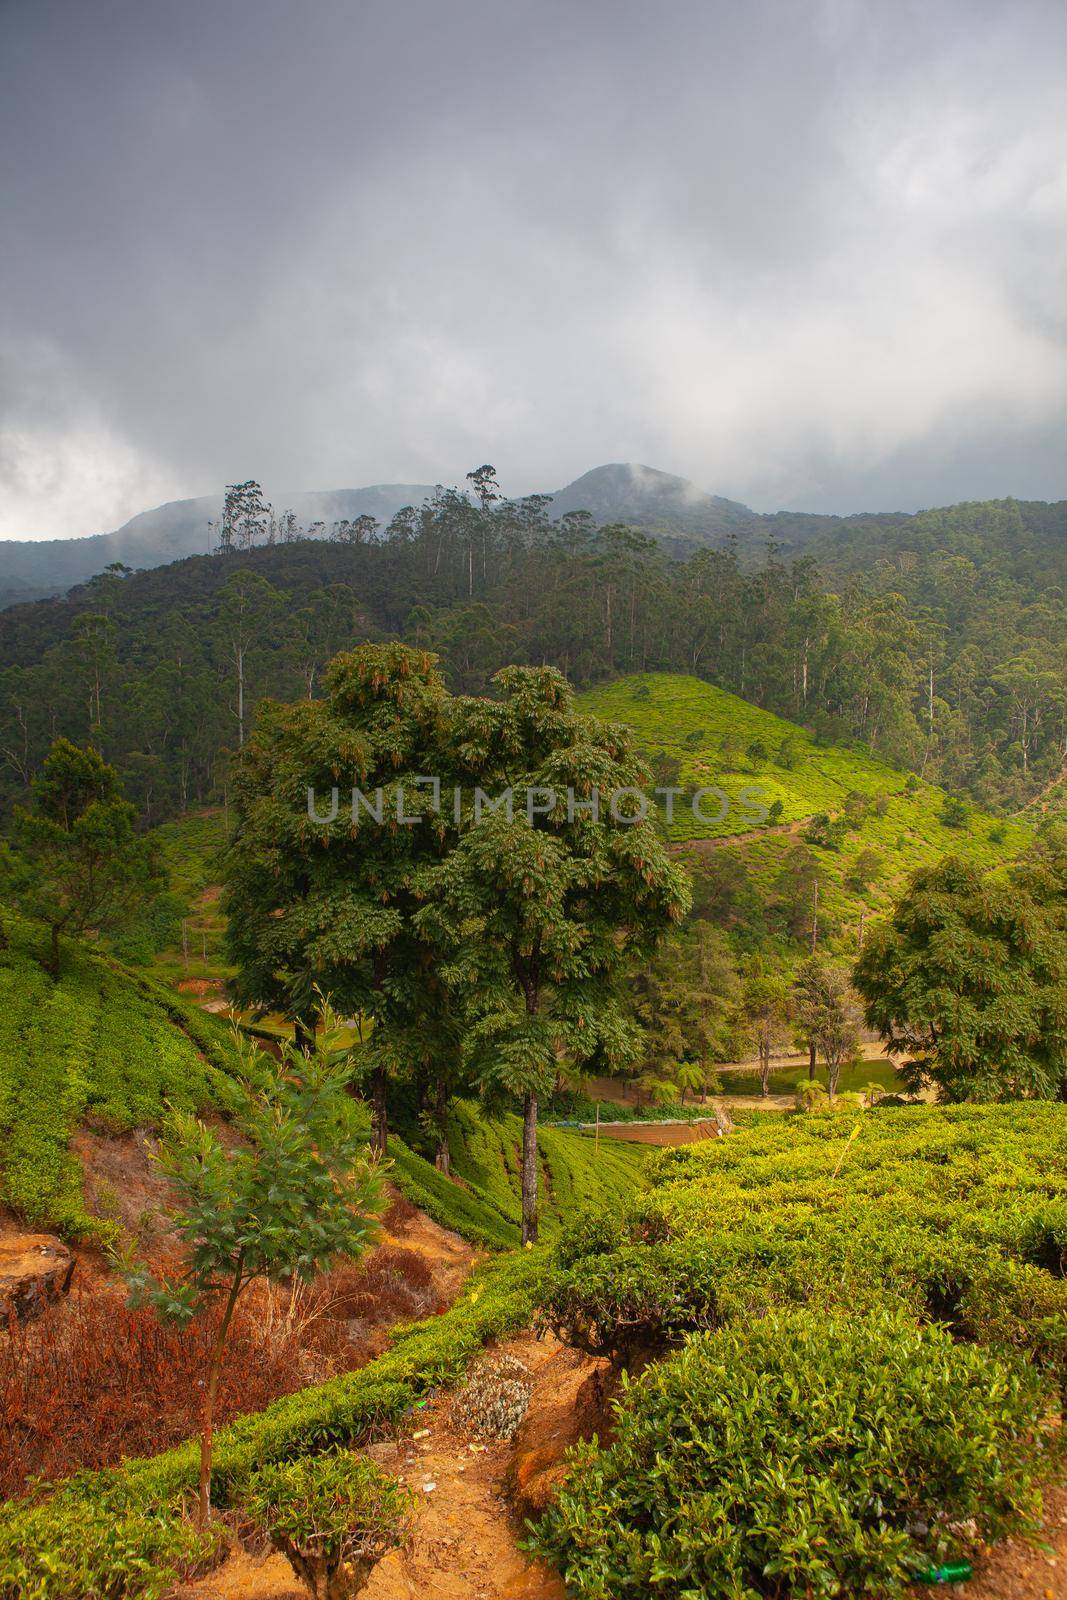 Nuwara Eliya tea plantation in Sri Lanka. Nuwara Eliya is the most important place for tea plantation and production in Sri Lanka.